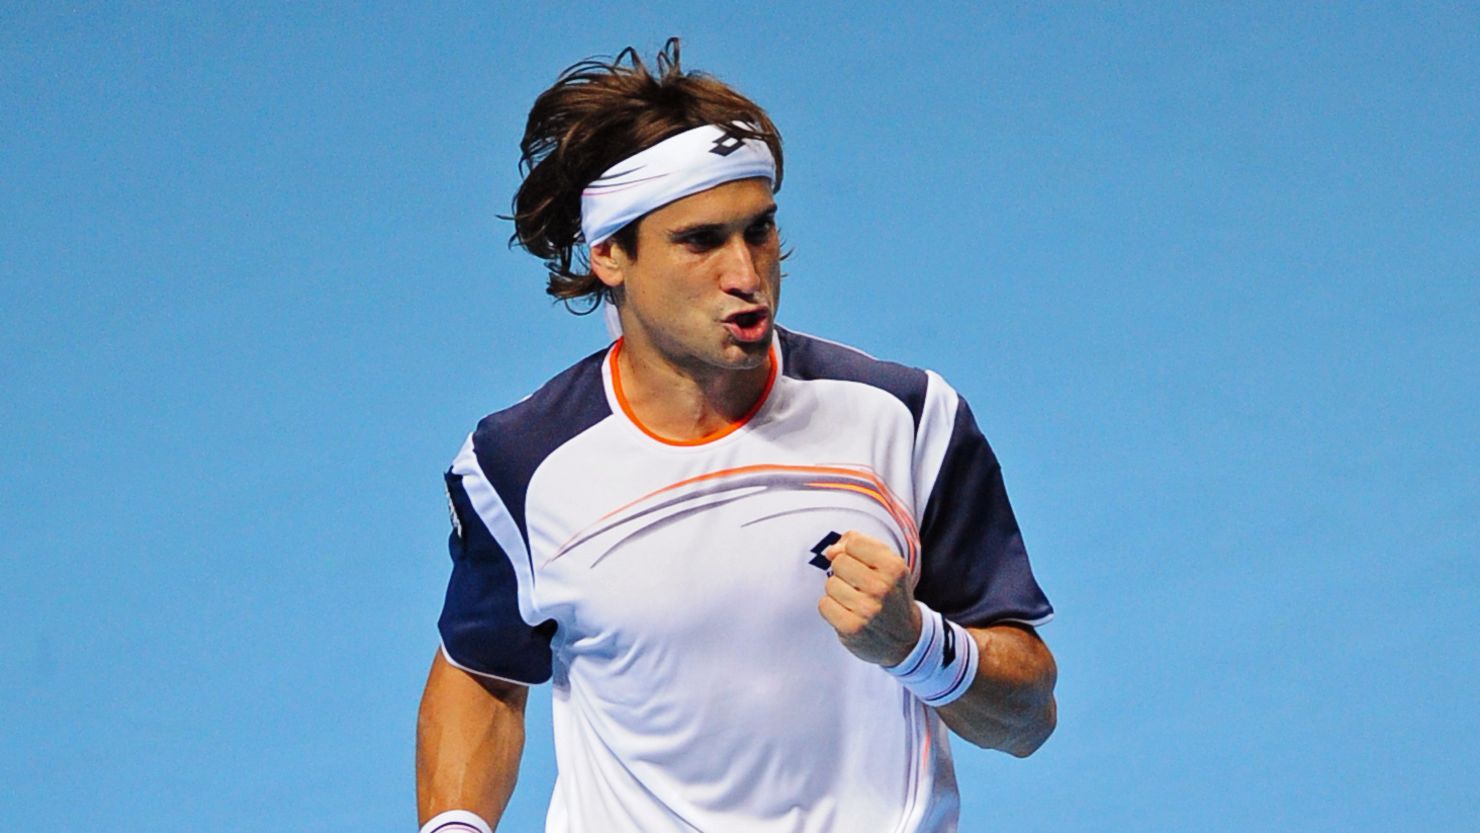 David Ferrer celebrates his stunning stright sets victory over Novak Djokovic in London.